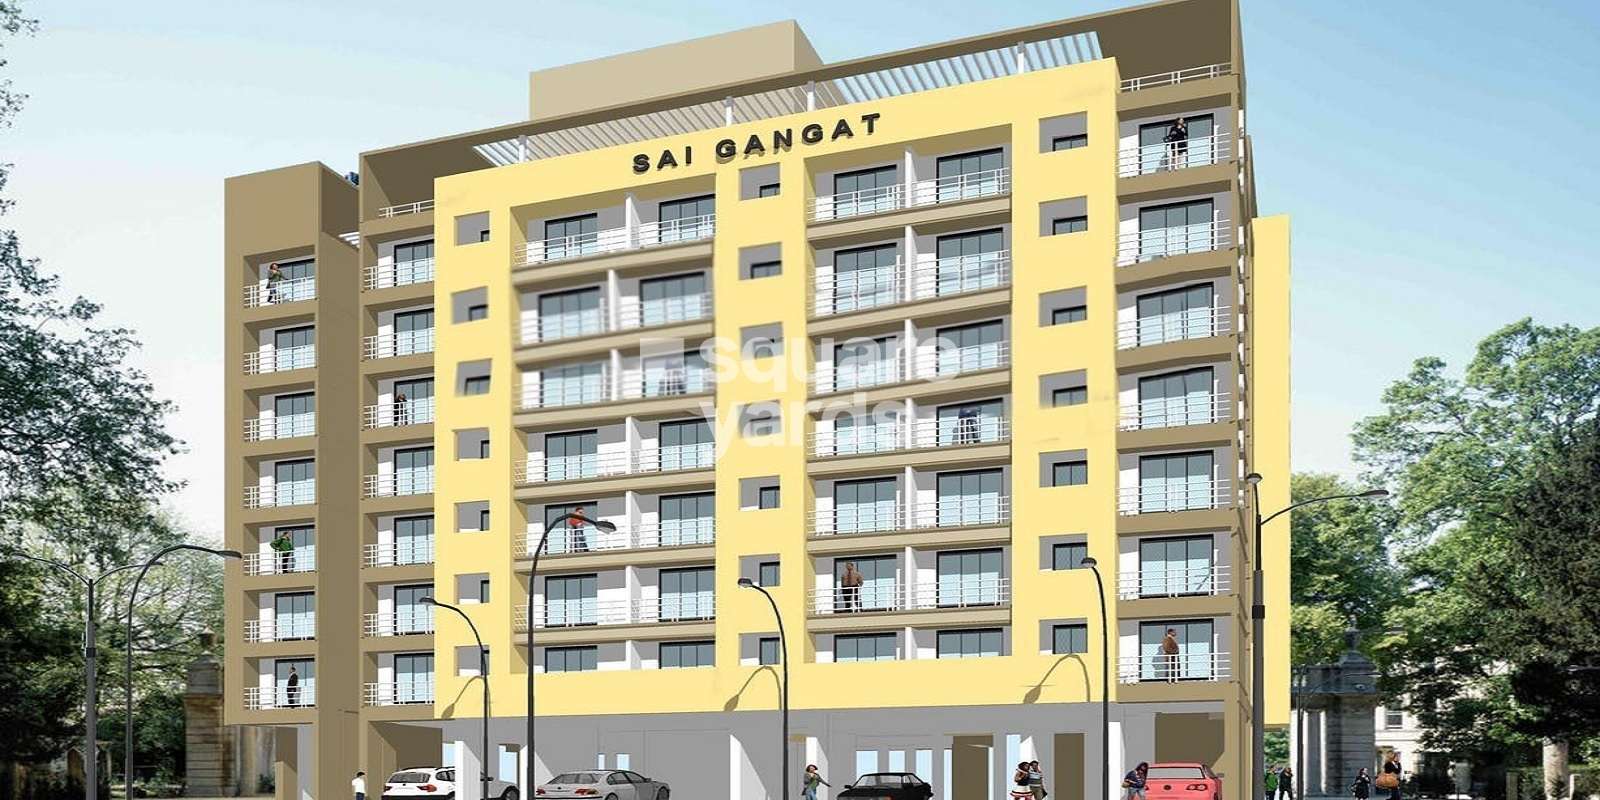 Sai Gangat Apartment Cover Image